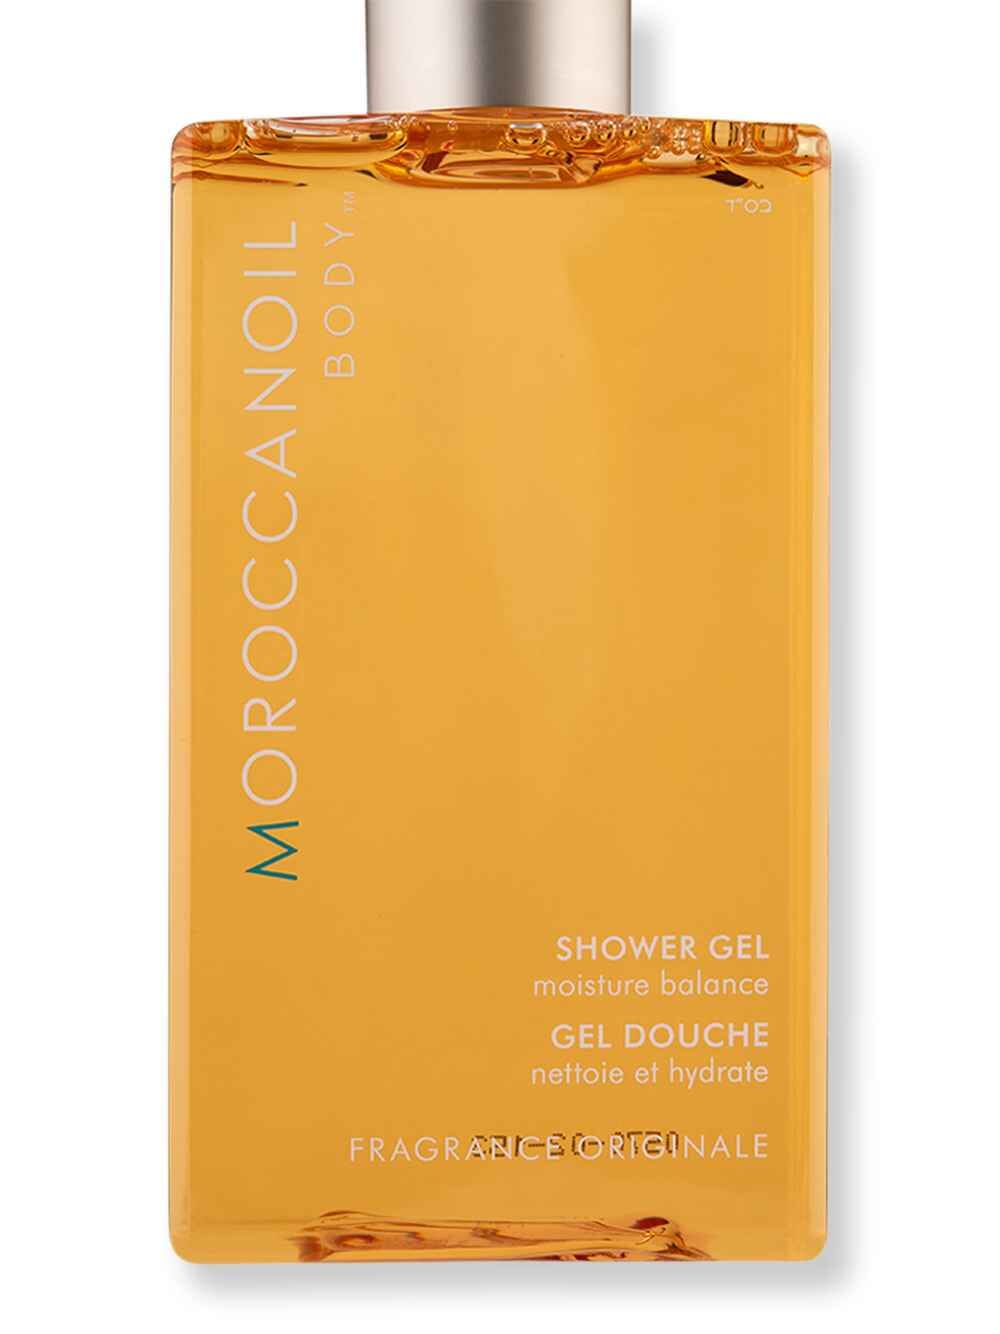 Moroccanoil Moroccanoil Shower Gel Fragrance Originale 8.1 fl oz250 ml Shower Gels & Body Washes 